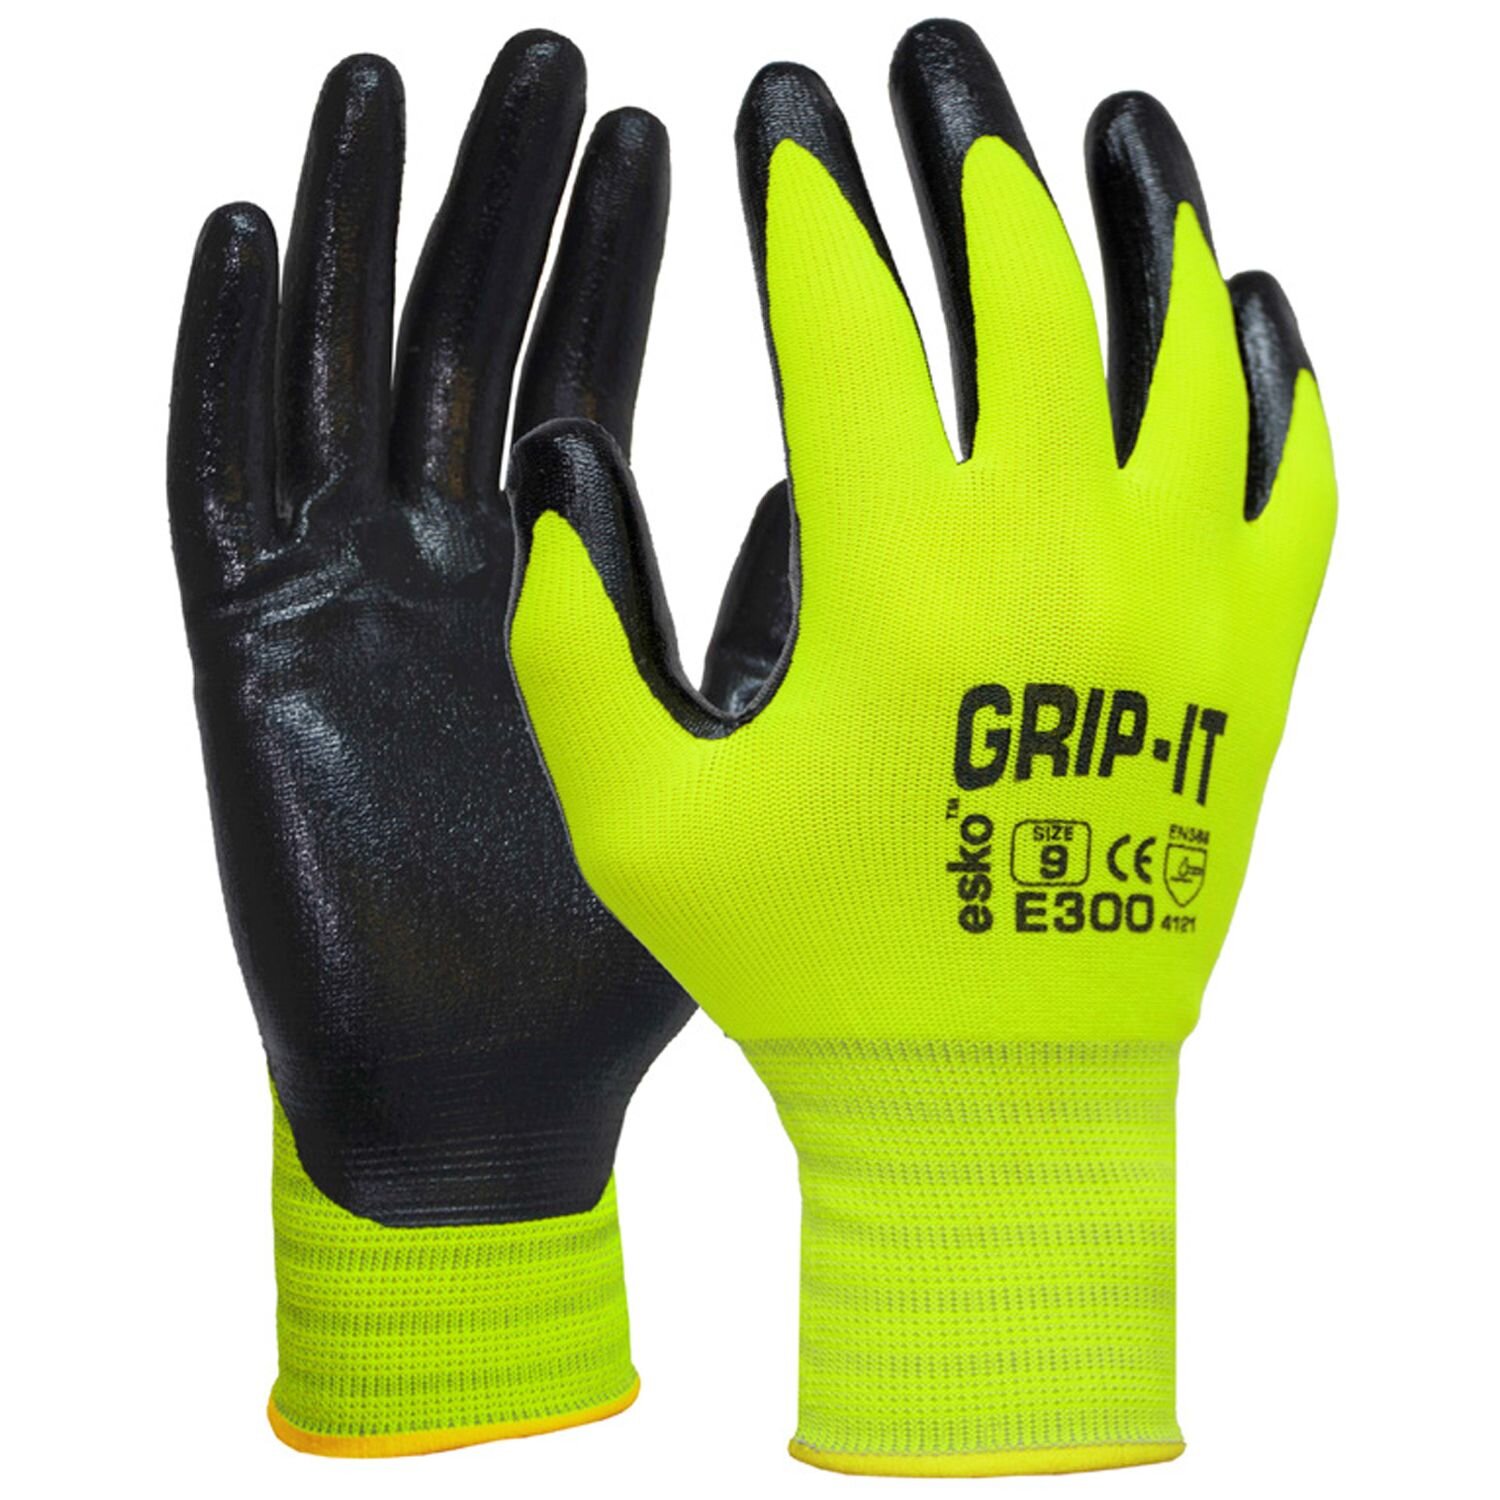 Grip It Nitrile Palm Coat Glove (Pkt 12)